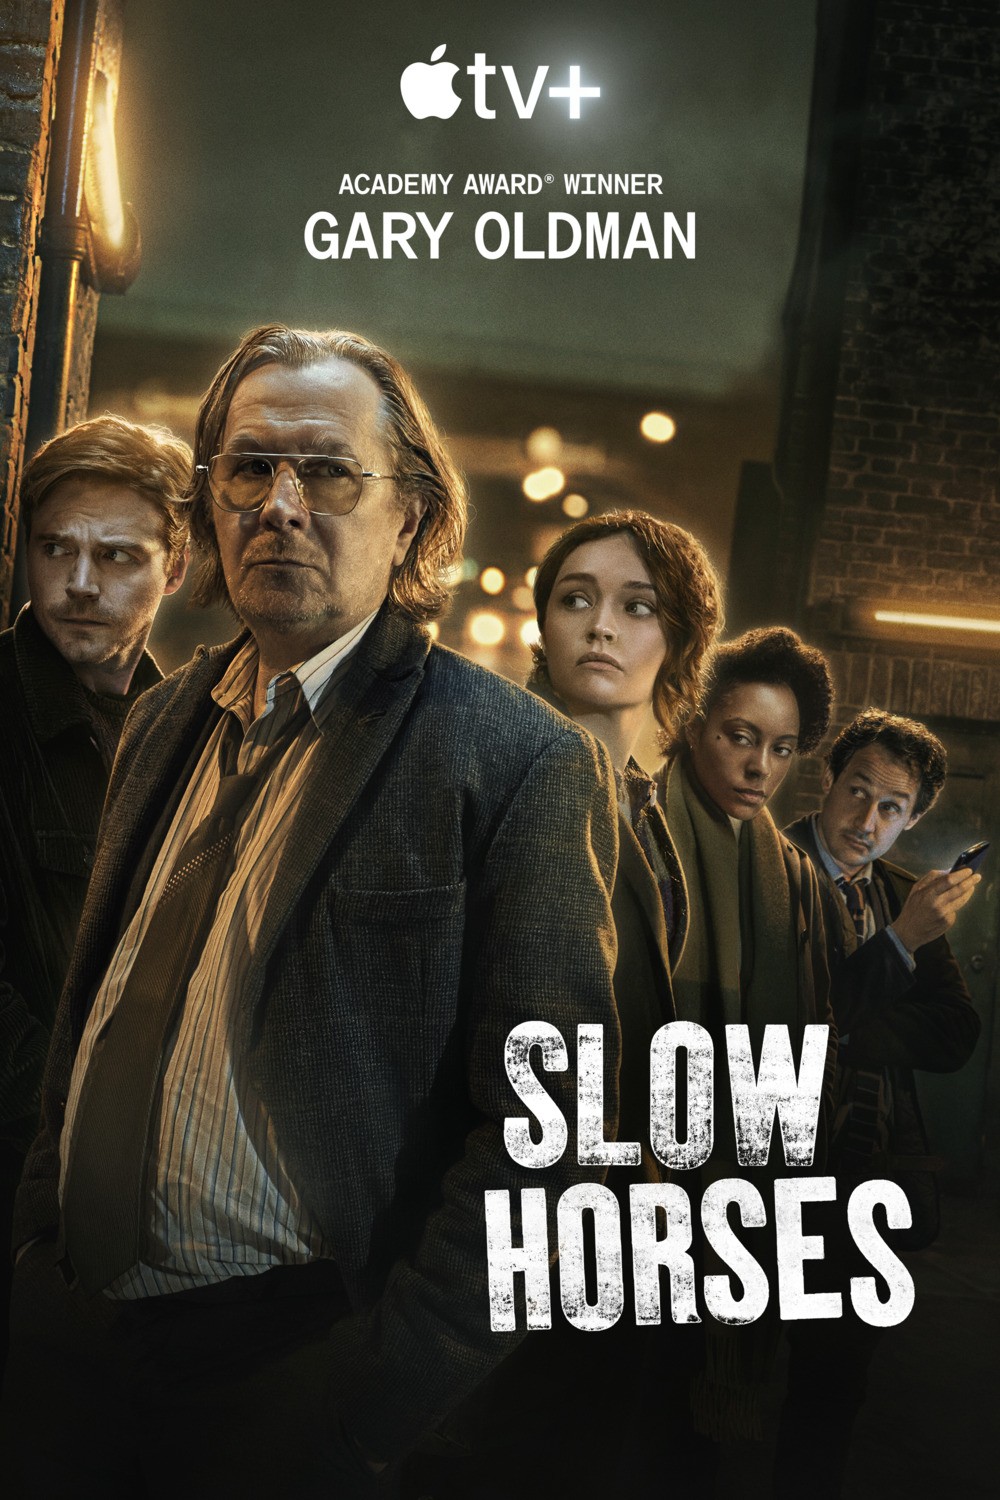 Медленные лошади / Slow Horses